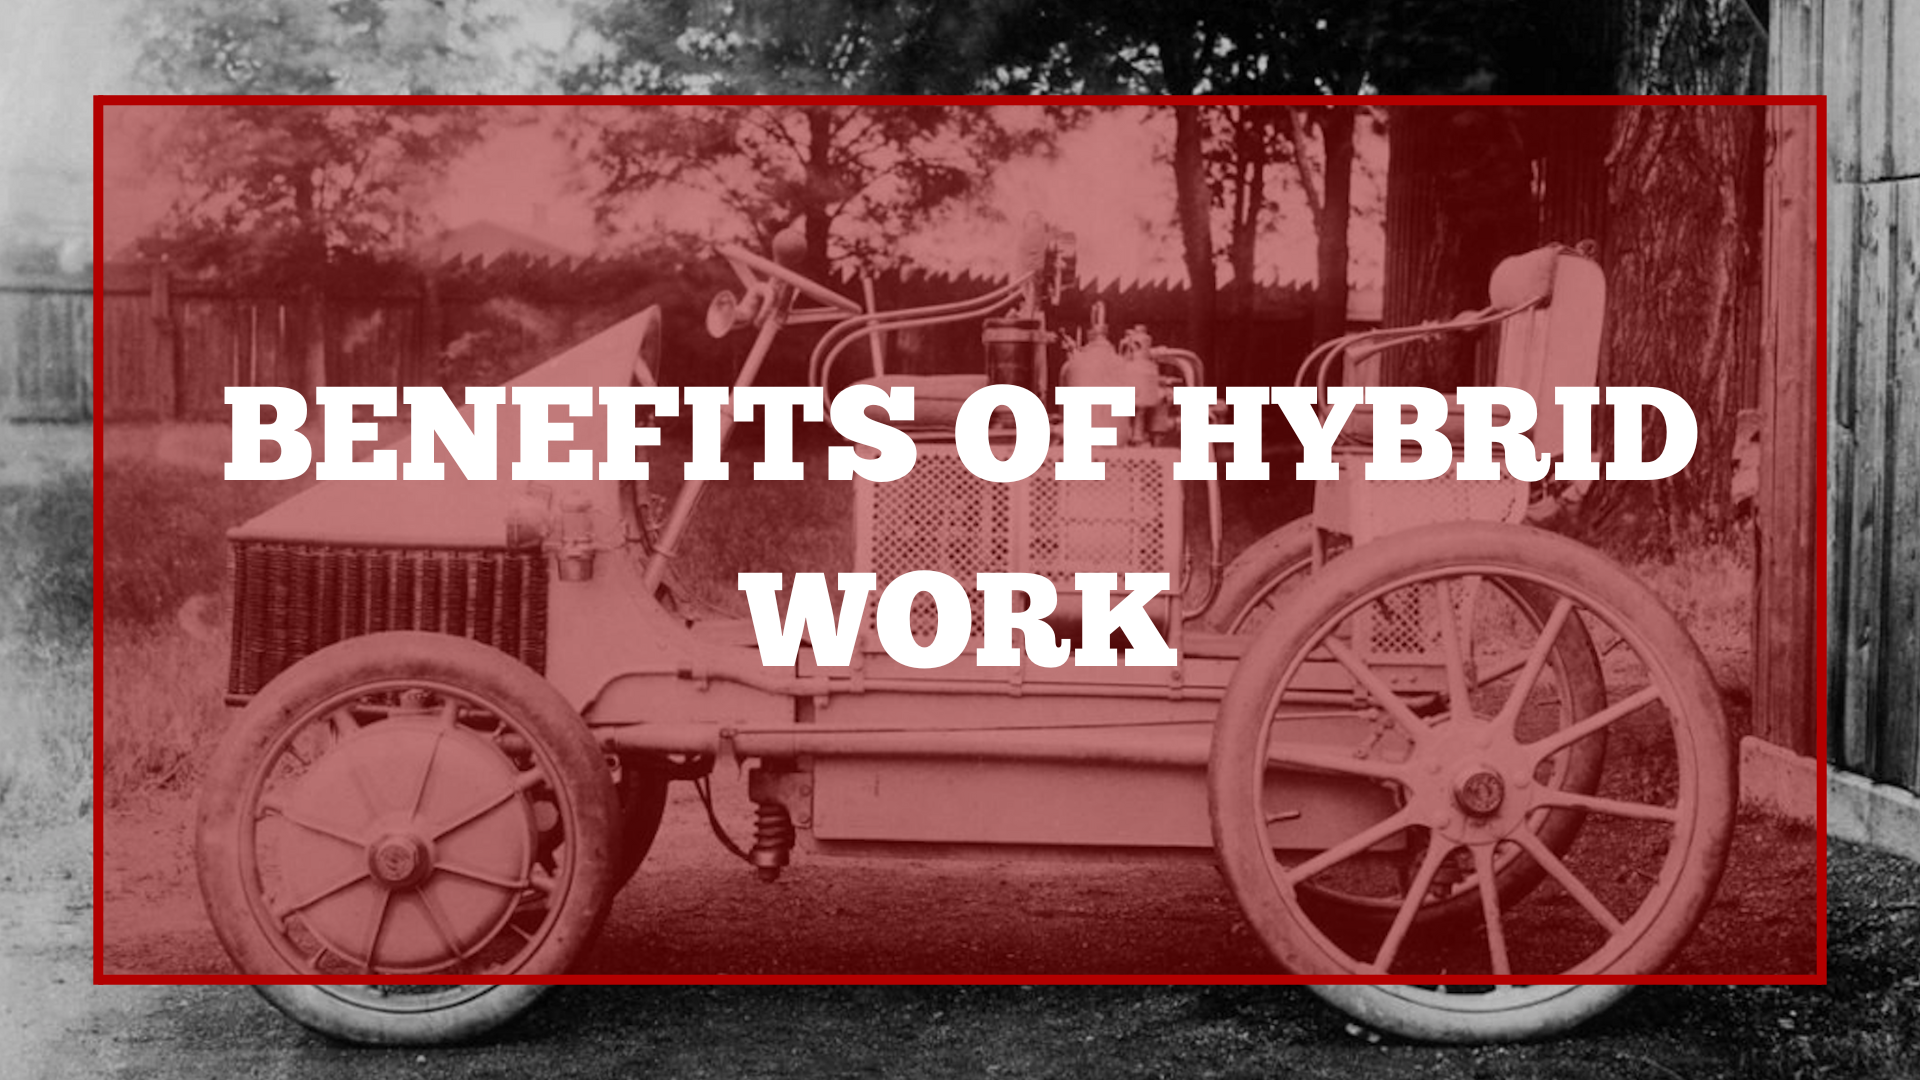 Benefits of hybrid work